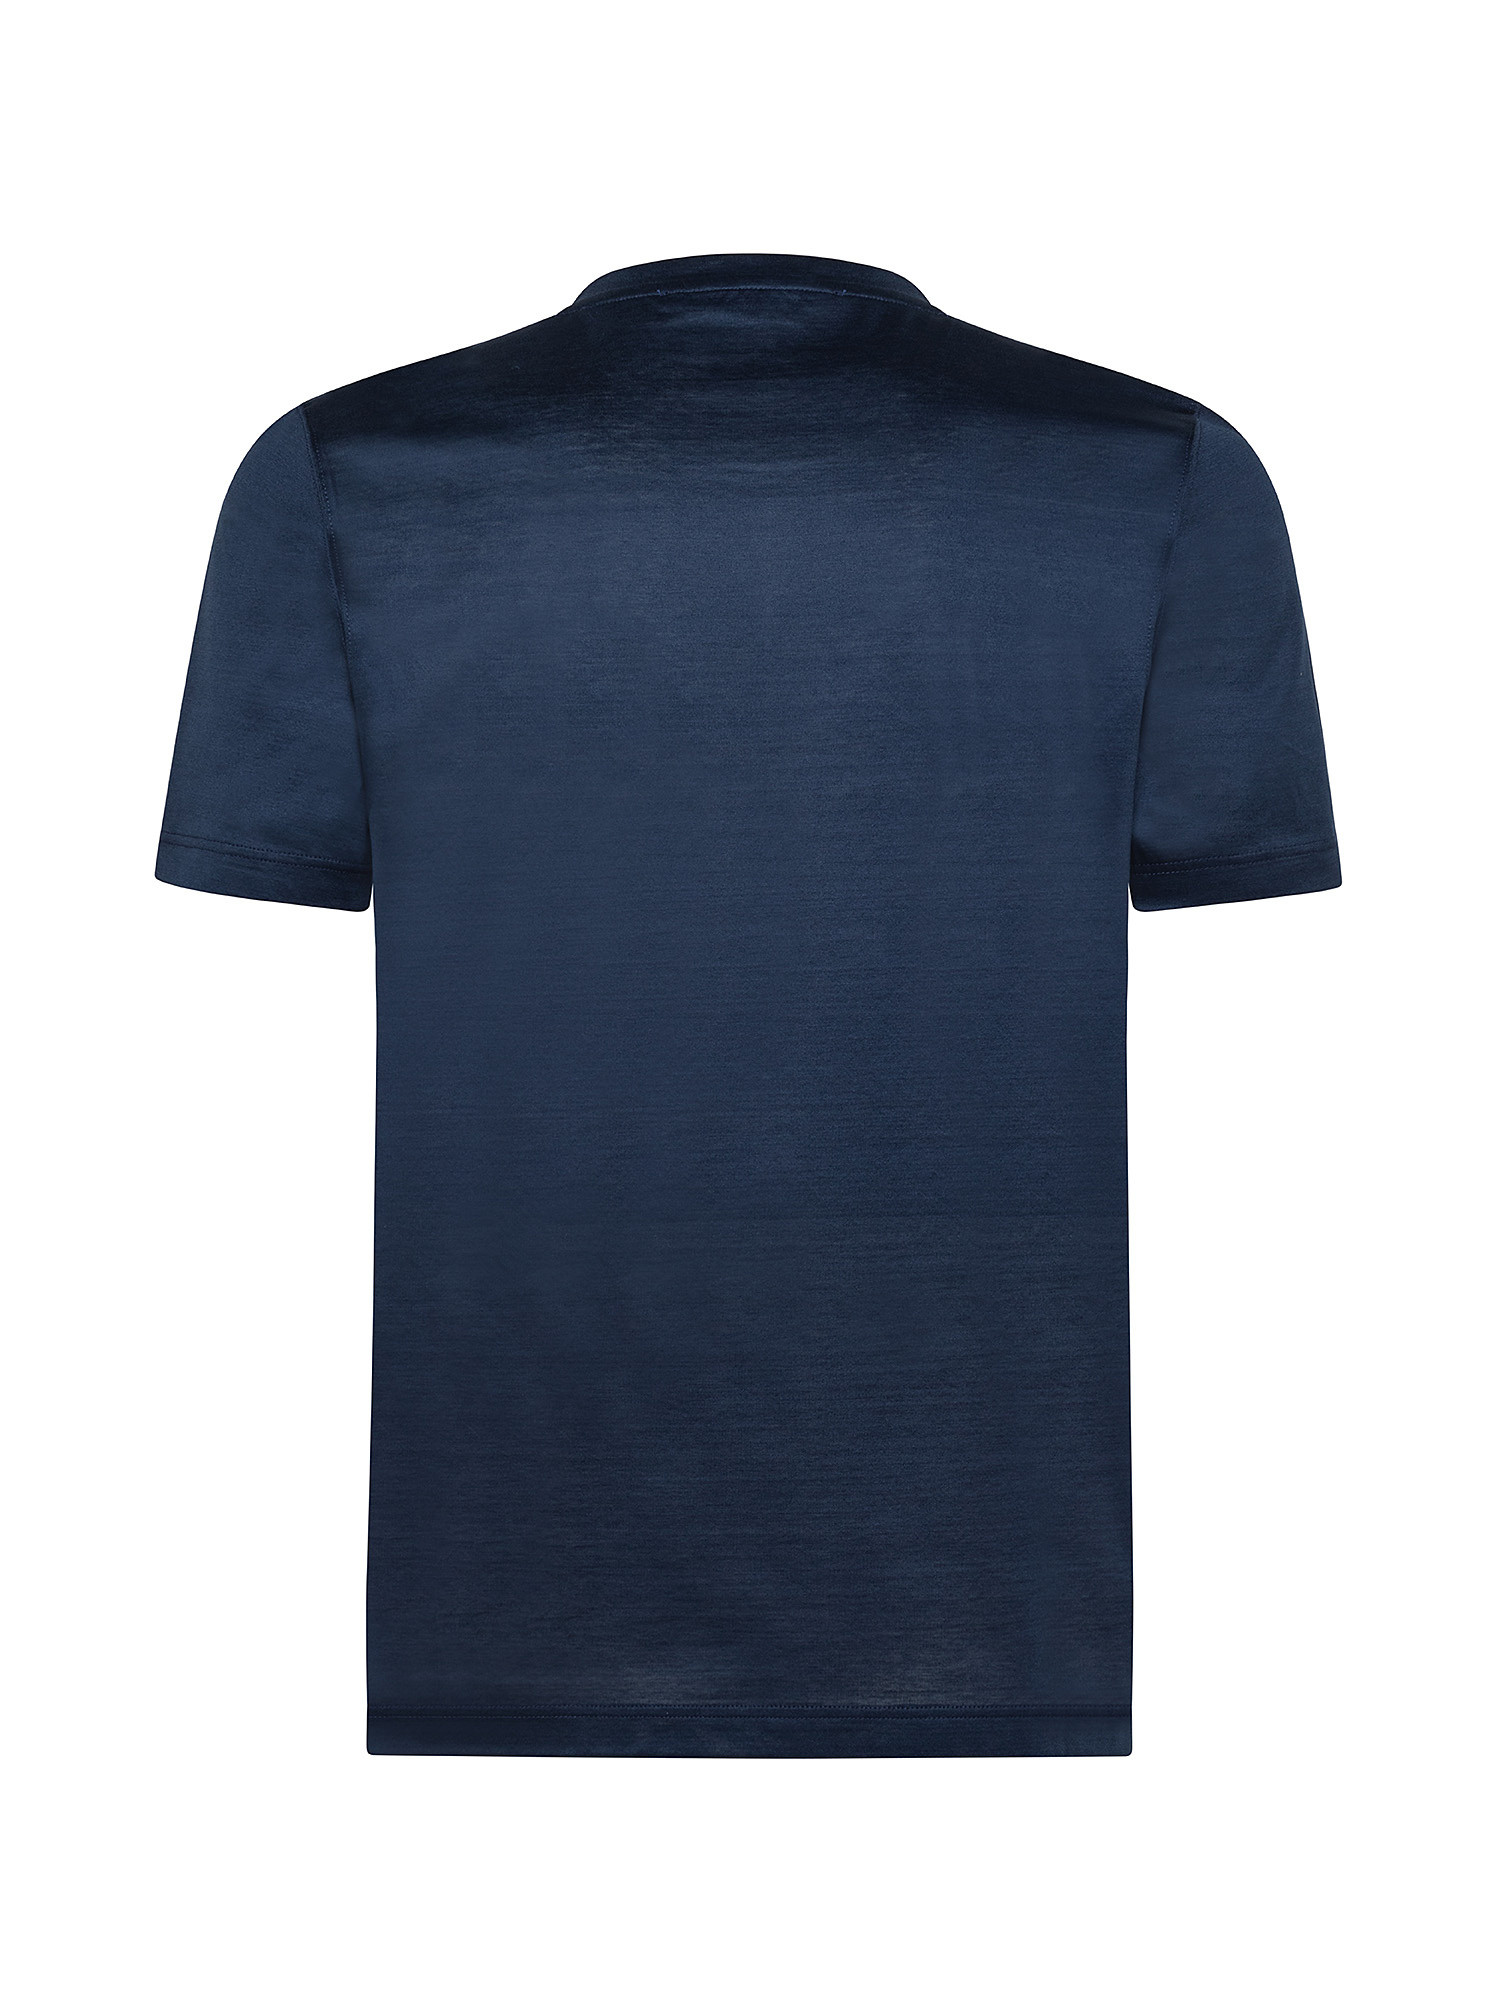 T-shirt girocollo manica corta, Blu, large image number 1